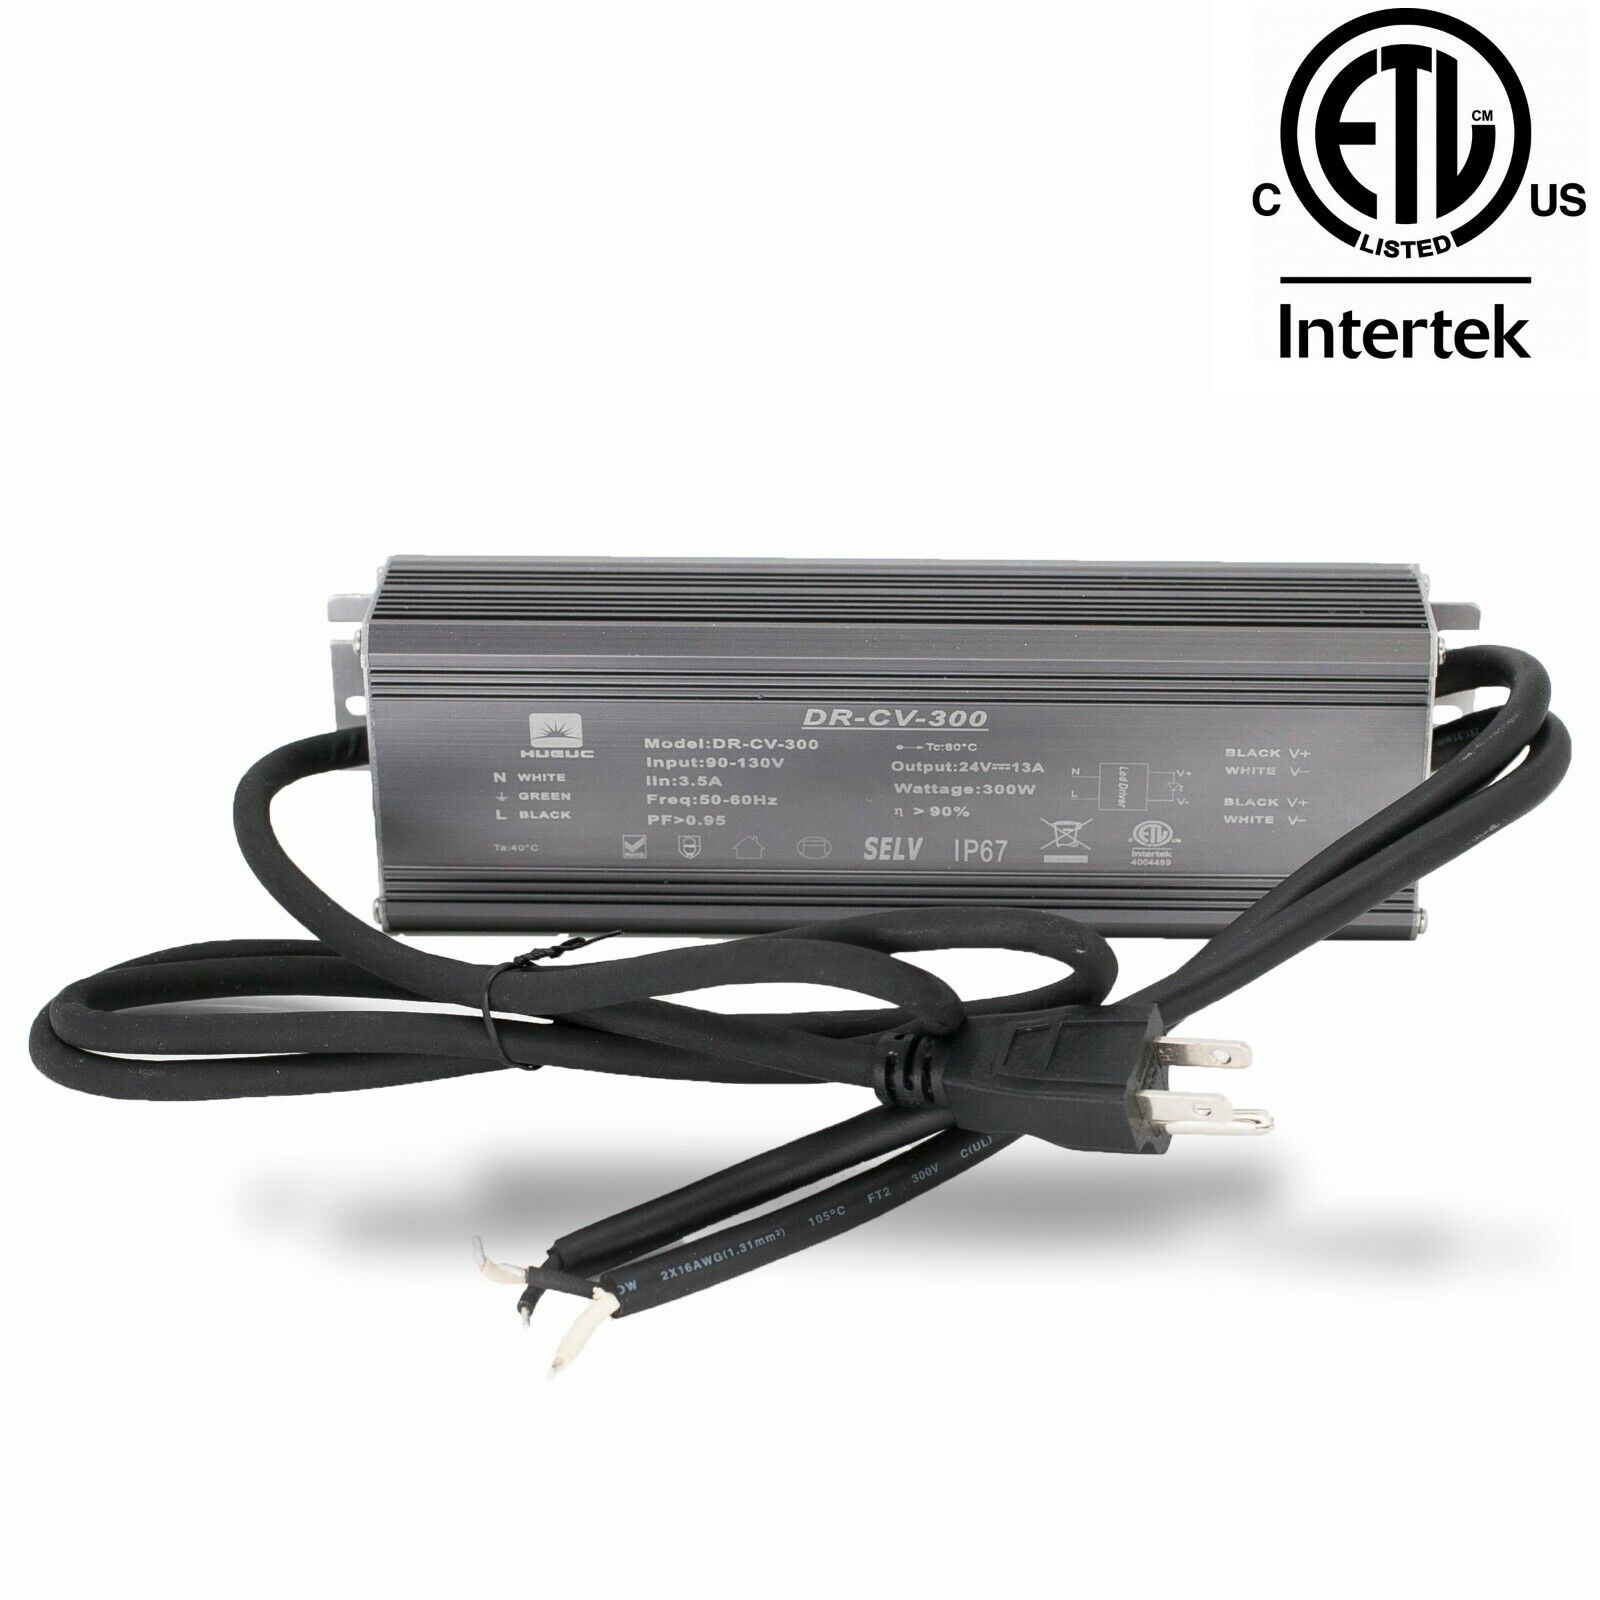 *Brand NEW* ETL LISTED 24v 12.5A 300w LED Light Power Supply Driver Waterproof + AC Plug